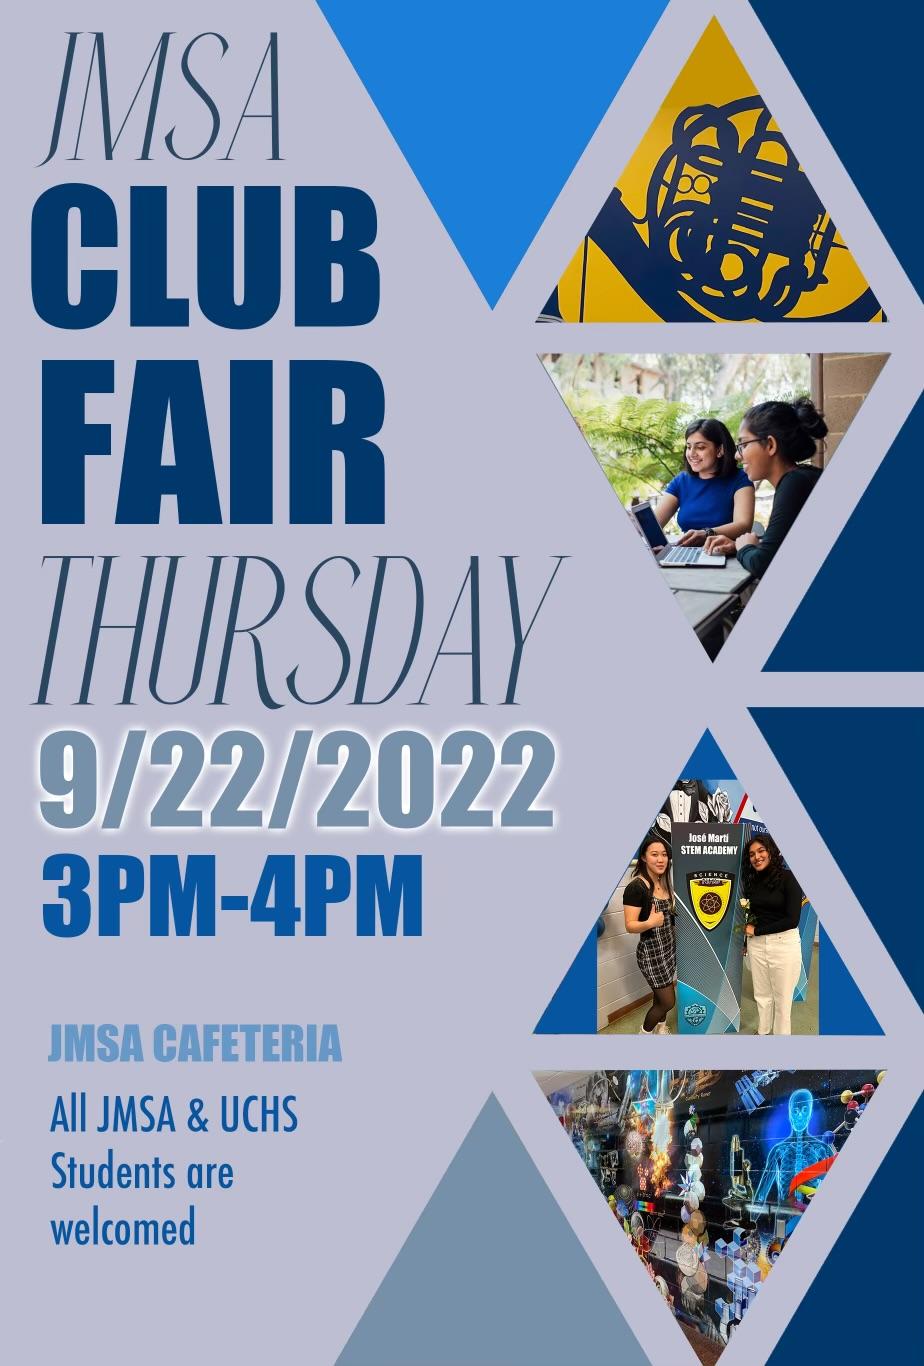 JMSA Club Fair coming up on Thursday September 22nd